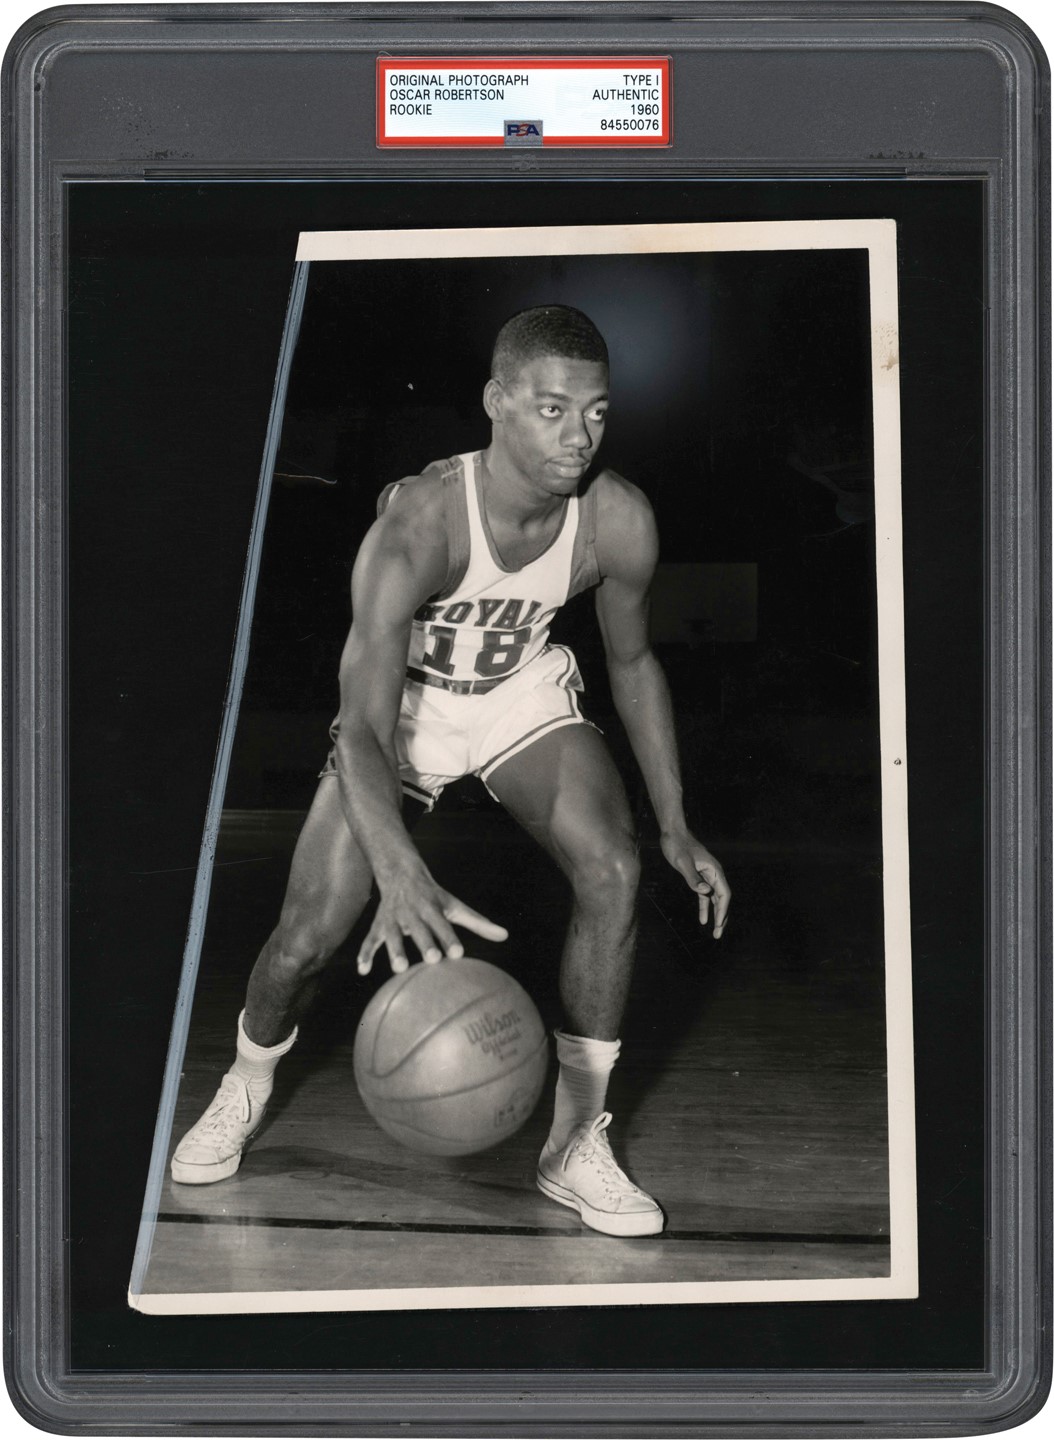 1960 Oscar Robertson Rookie Photograph - His Earliest Known NBA Photo (PSA Type I)